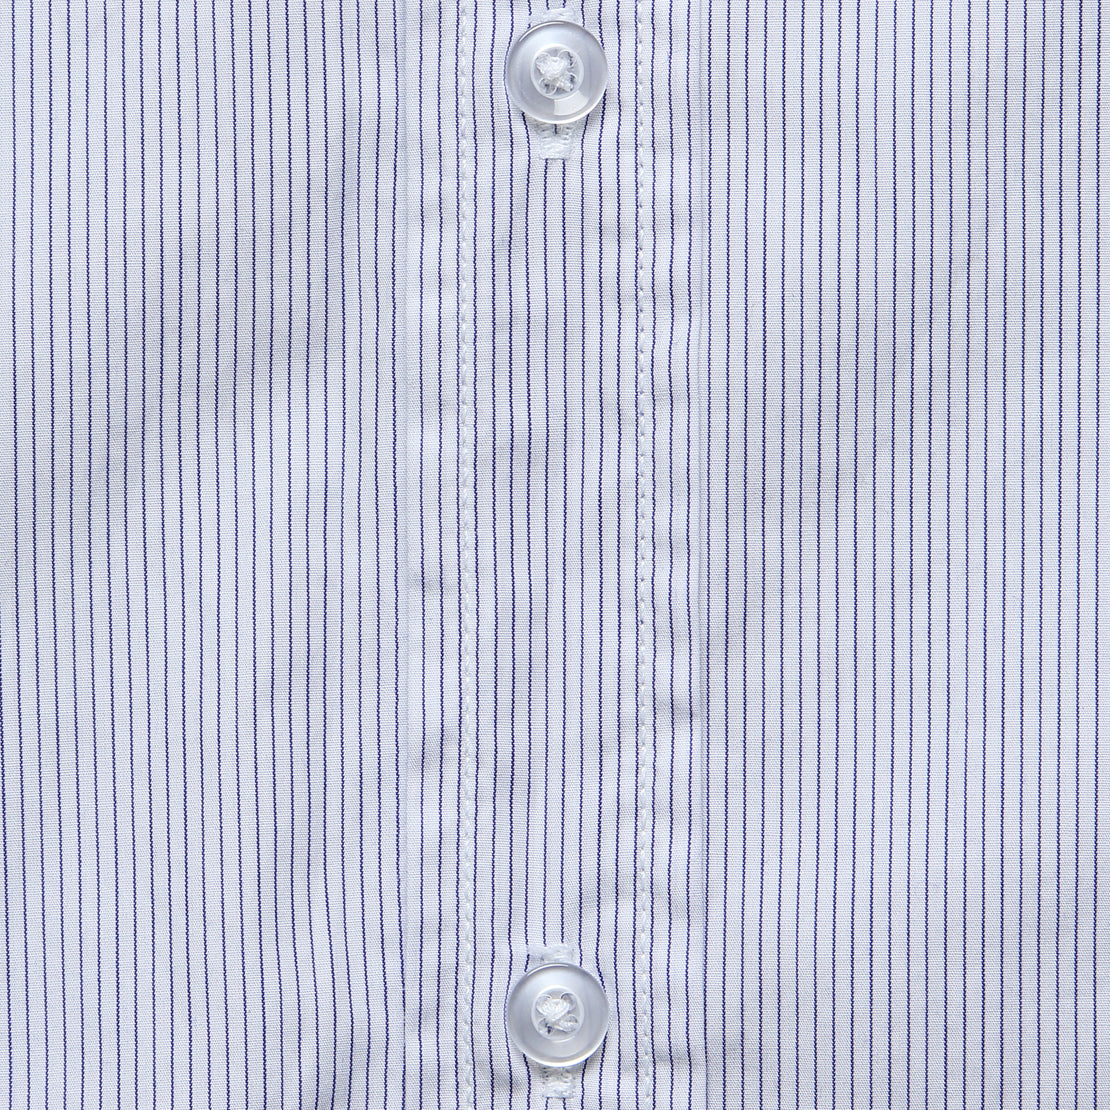 Yarn Dye Poplin Easy Shirt - Blue Line - Save Khaki - STAG Provisions - Tops - L/S Woven - Stripe